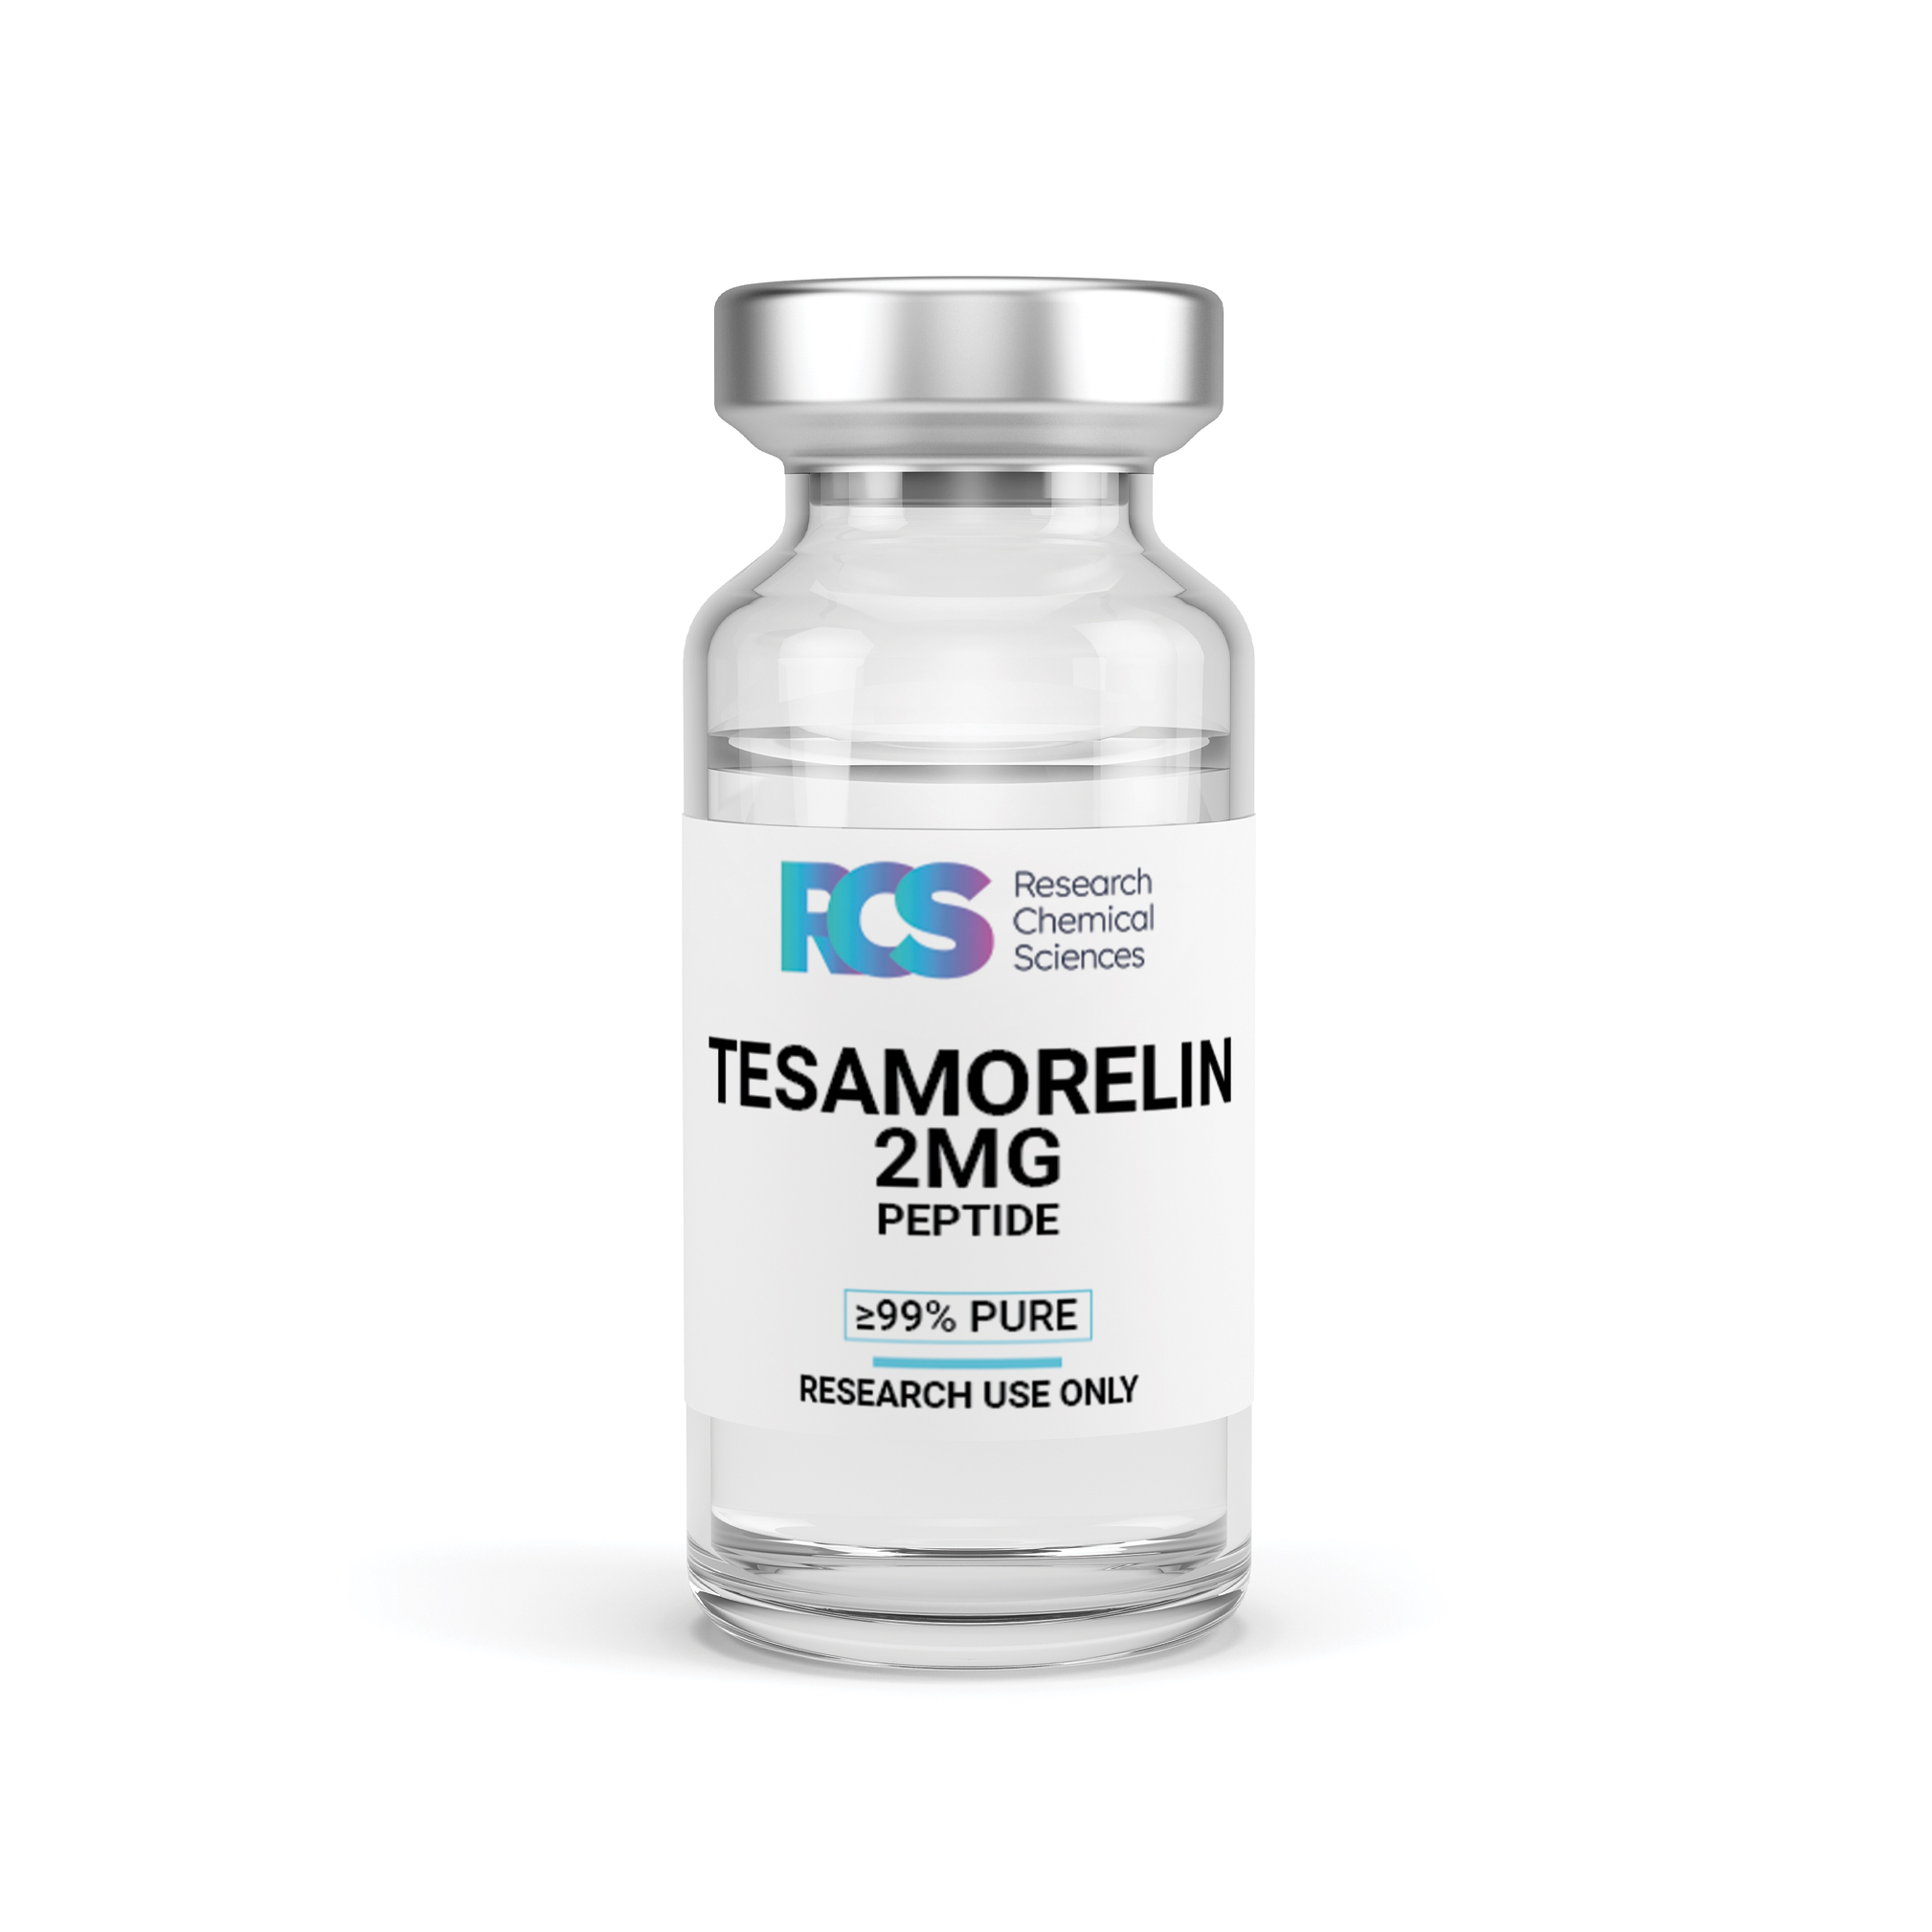 RCS-Tesamorelin-Peptide-2MG-Side-1